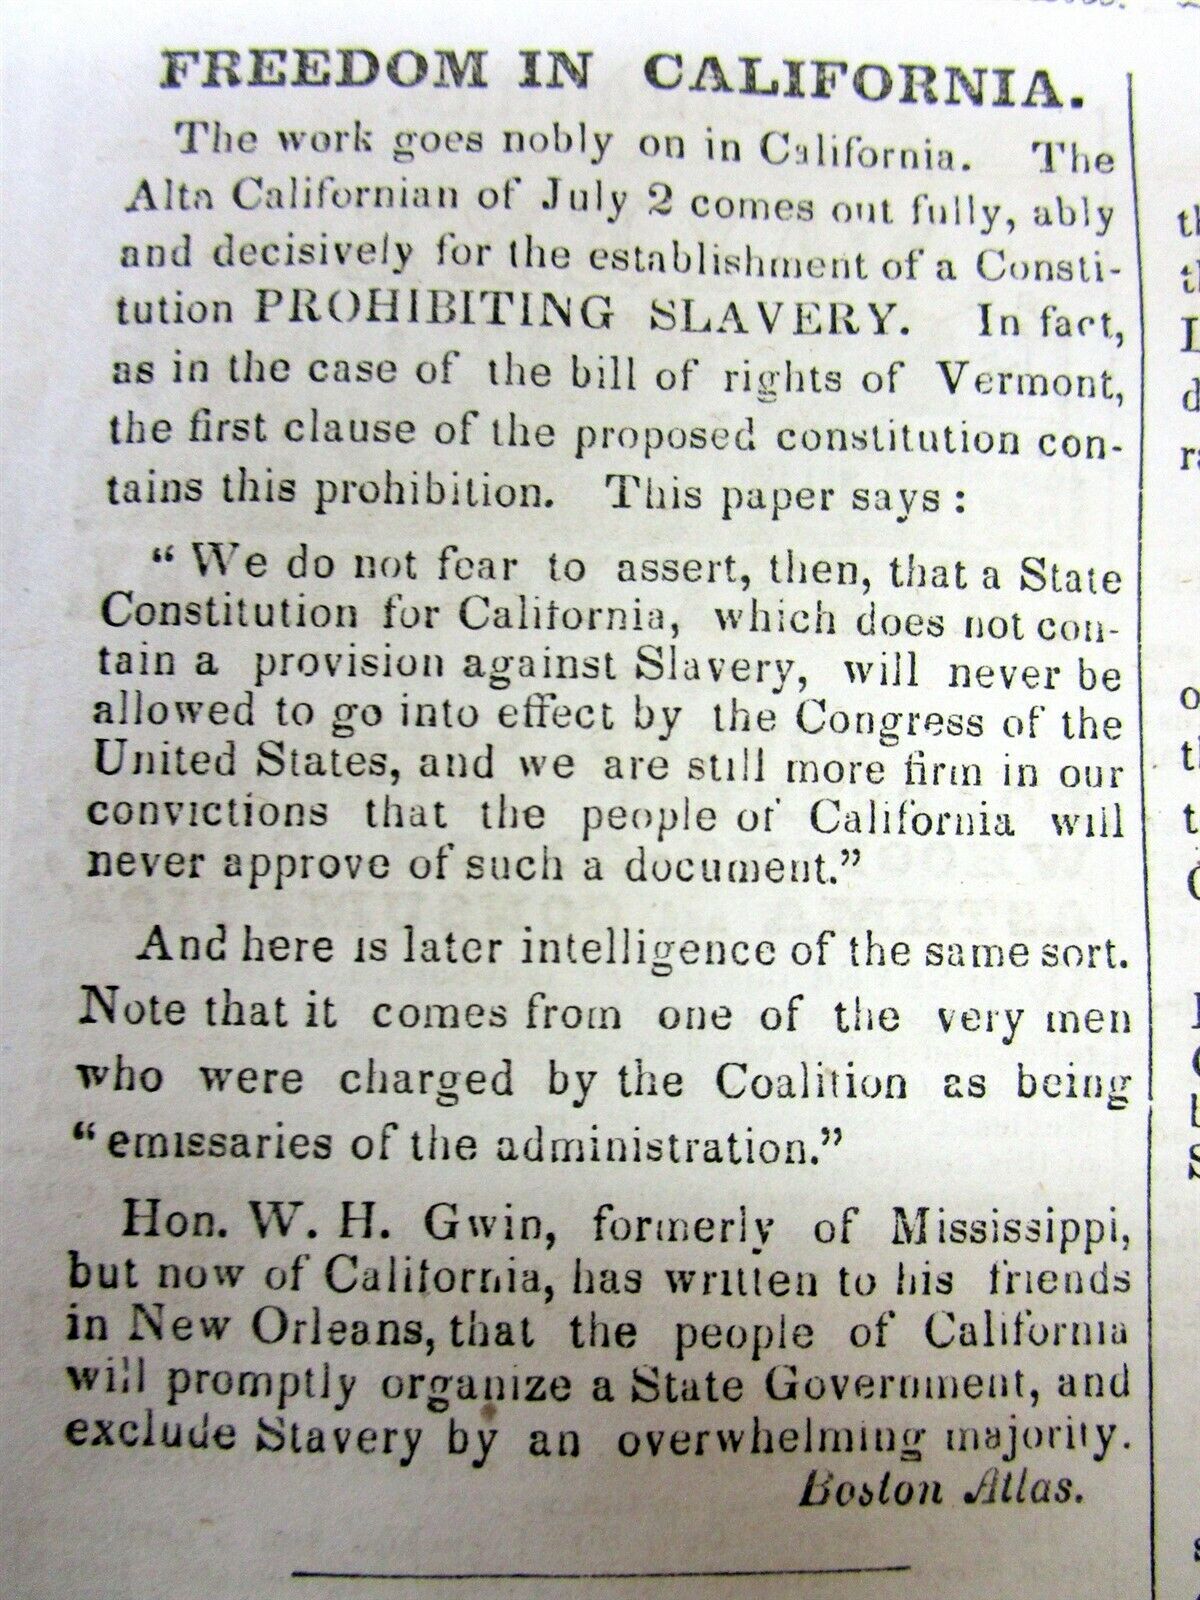 1849 newspaper SLAVERY PROHIBITED in Gold Rush era CALIFORNIA by CA Constitution